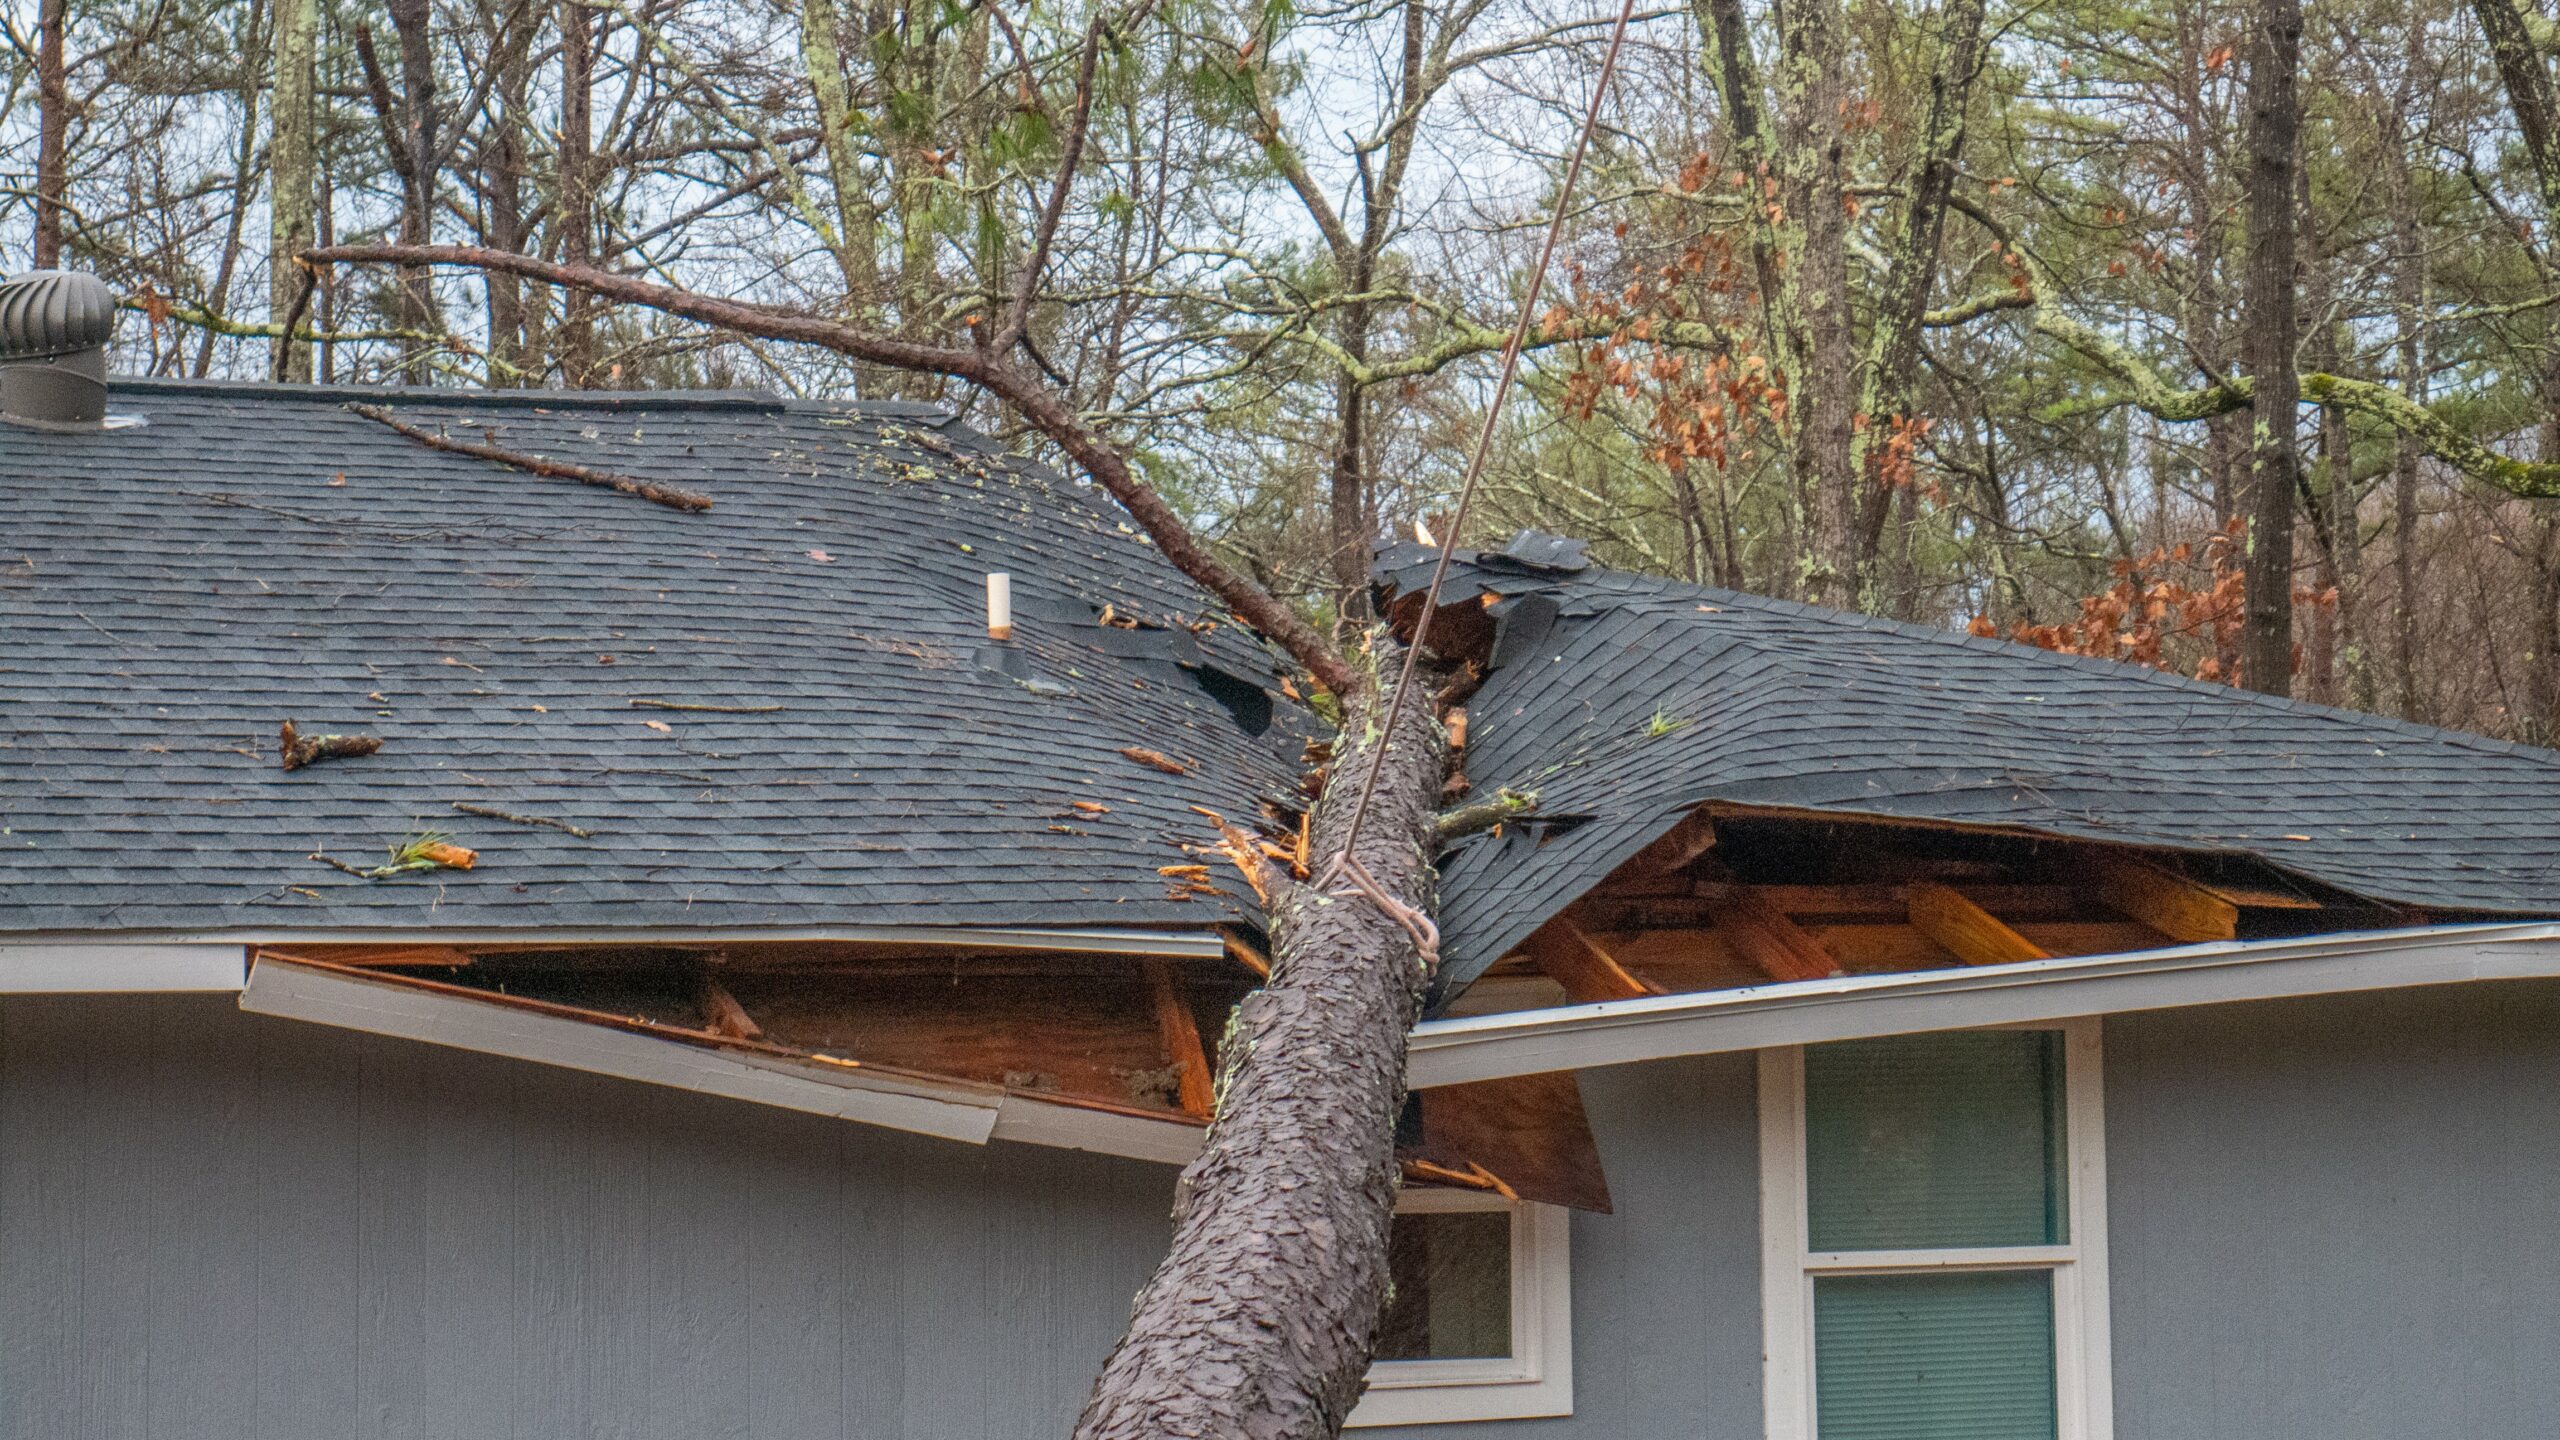 tree fallen on roof causing major damage.